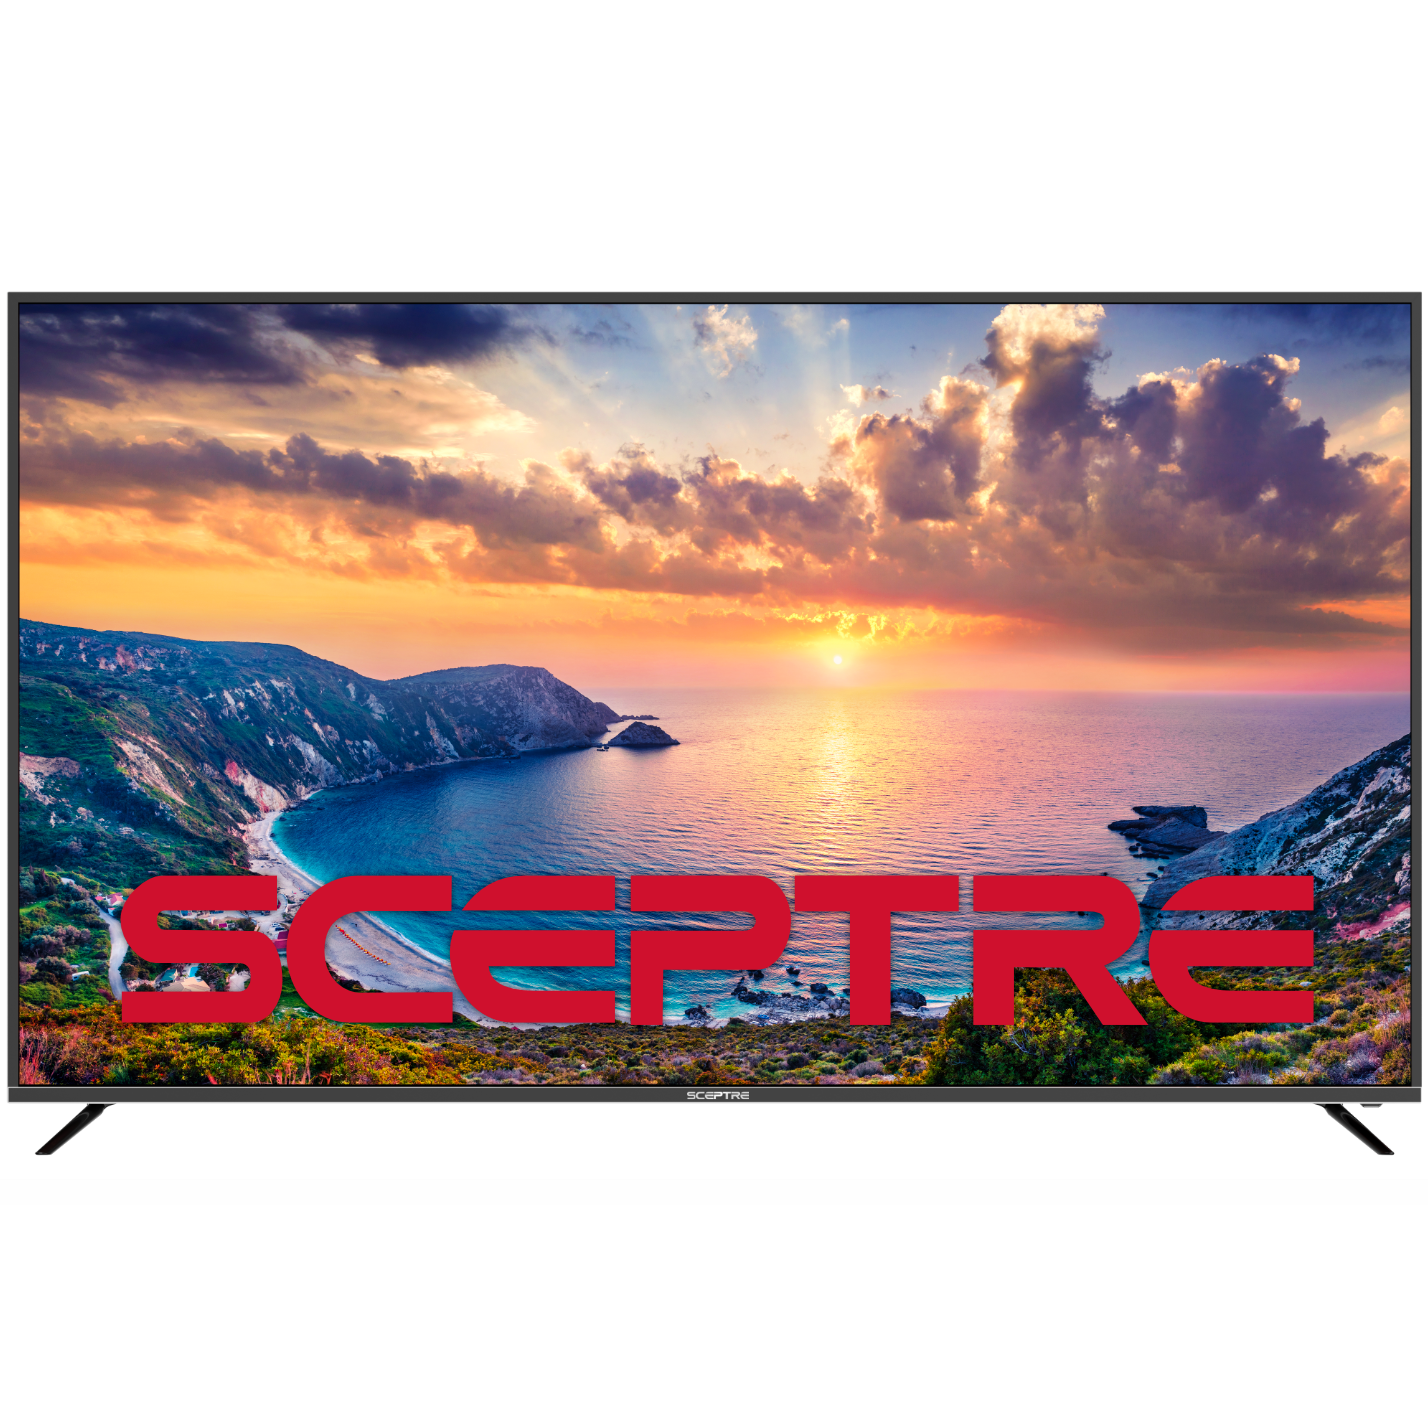 Sceptre 75" Class 4K UHD LED TV HDR U750CV-U - image 1 of 11